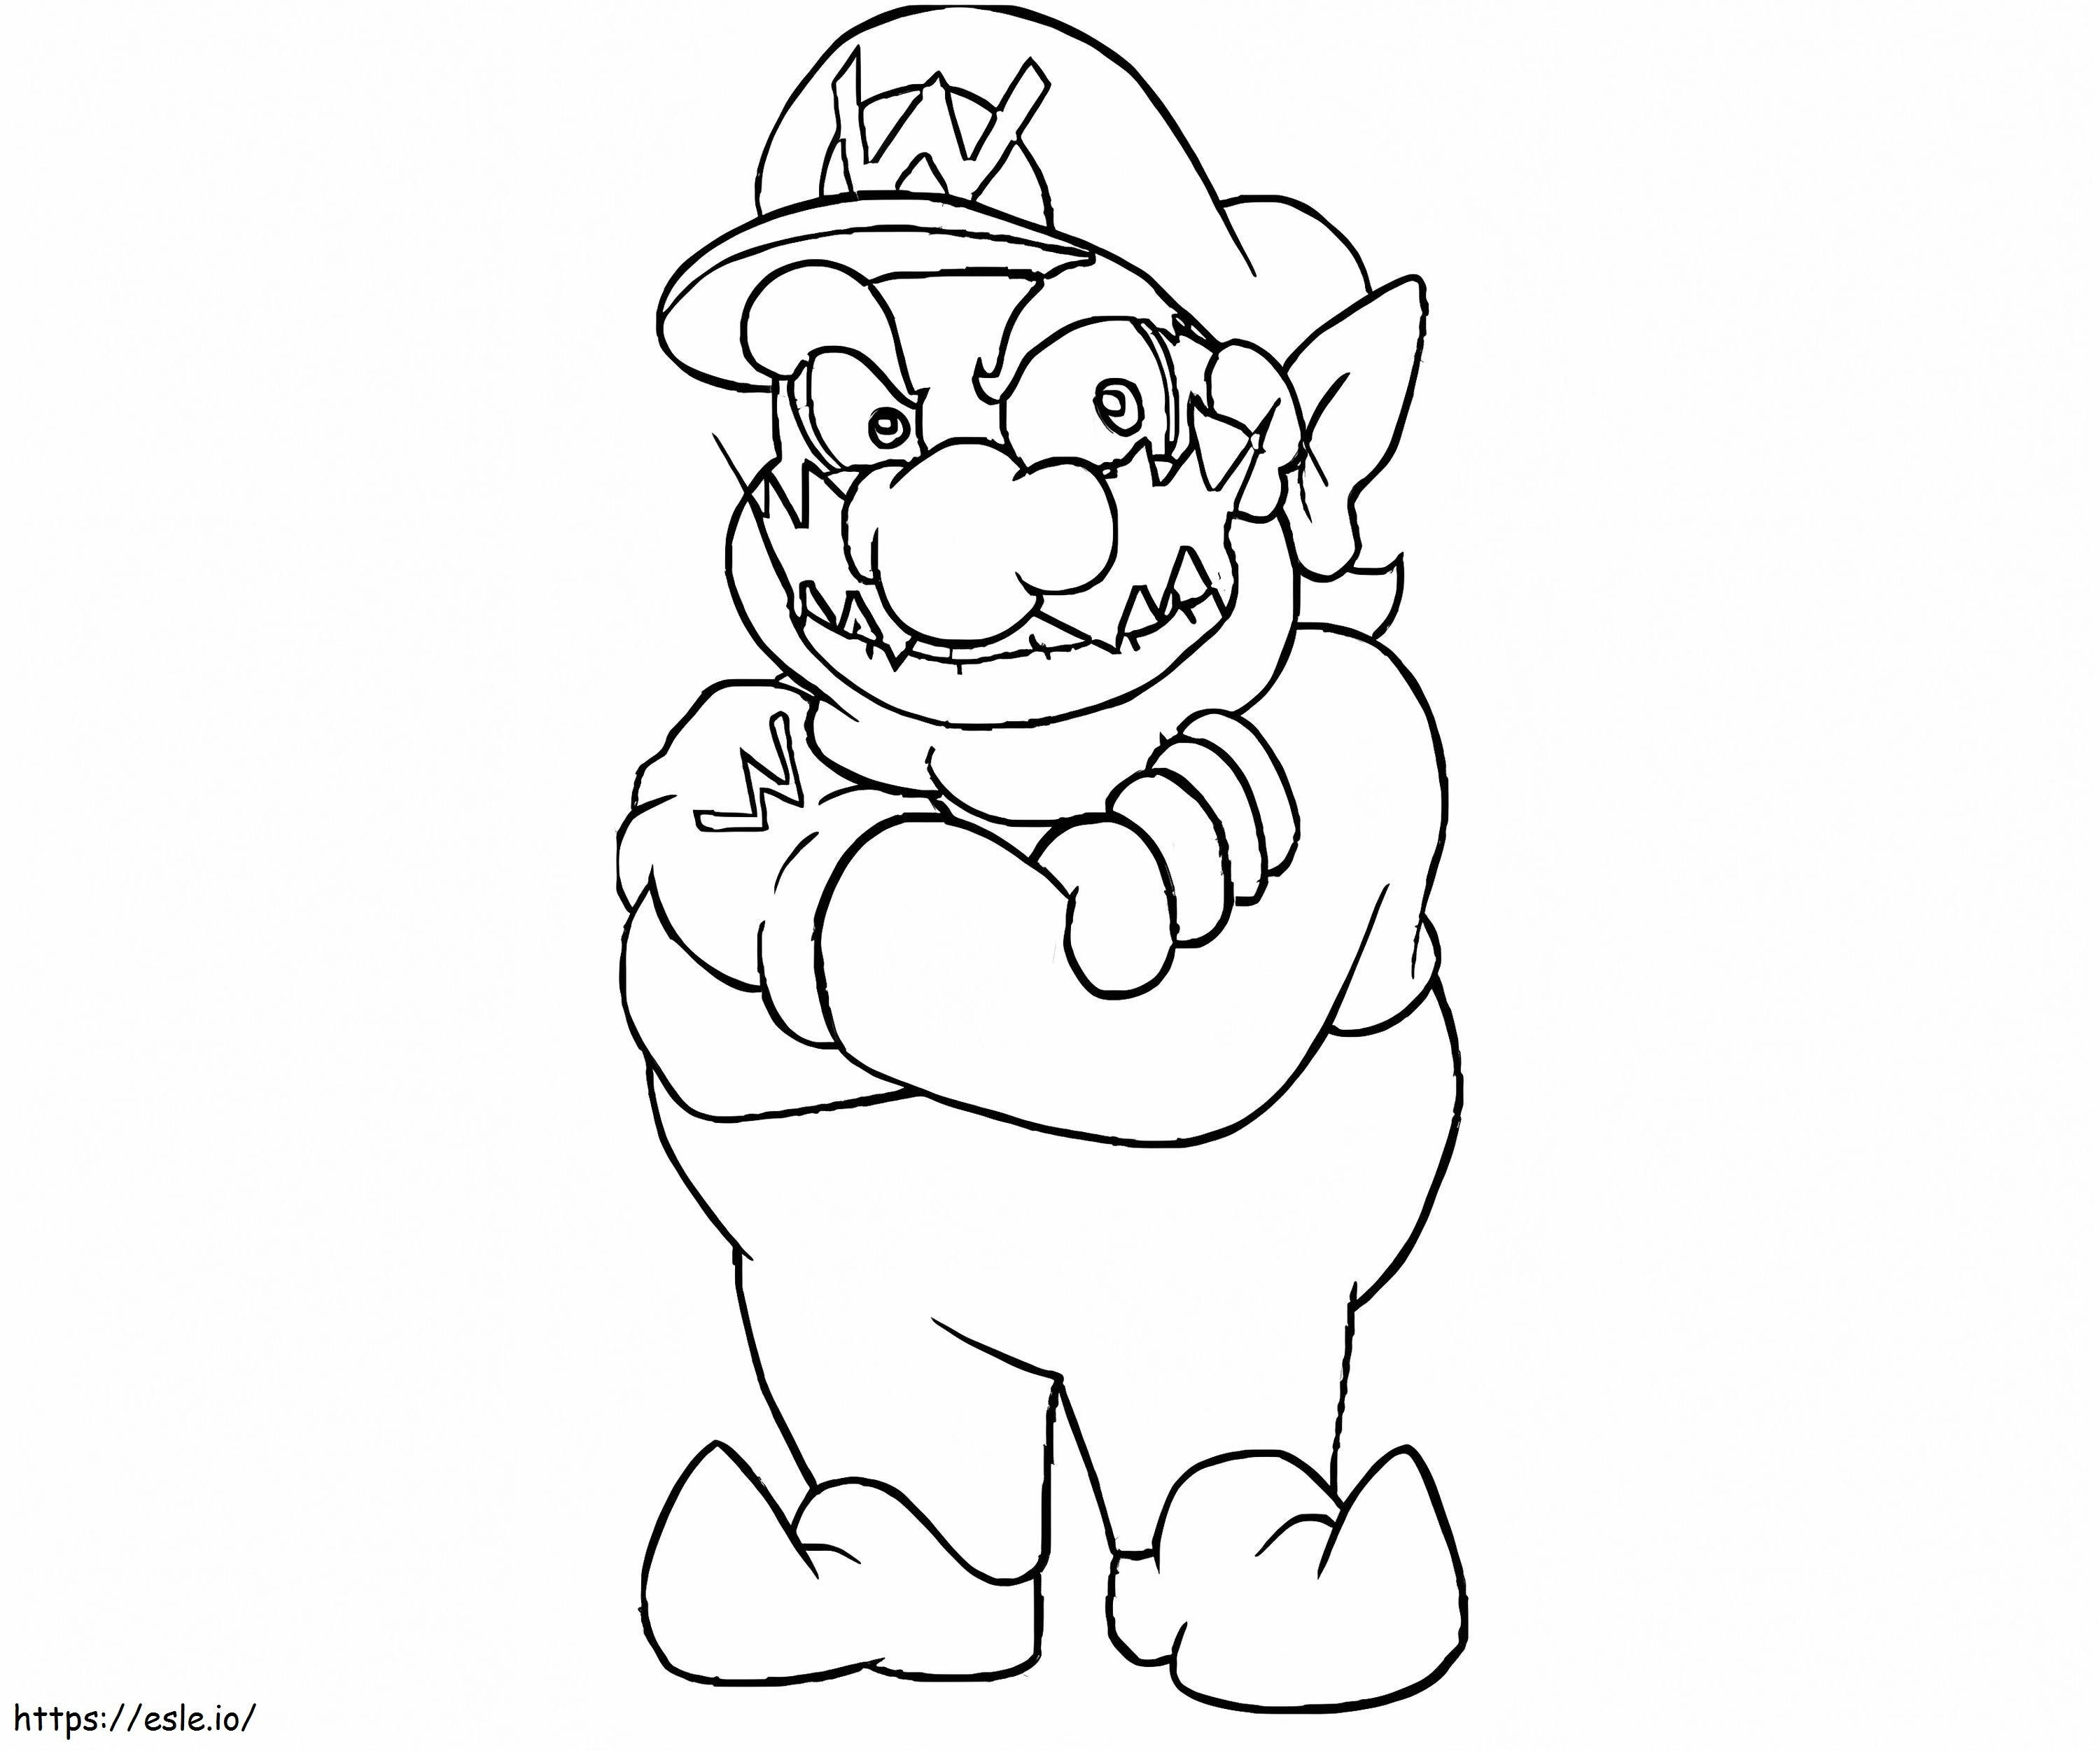 Wario a Super Mario 4-ből kifestő